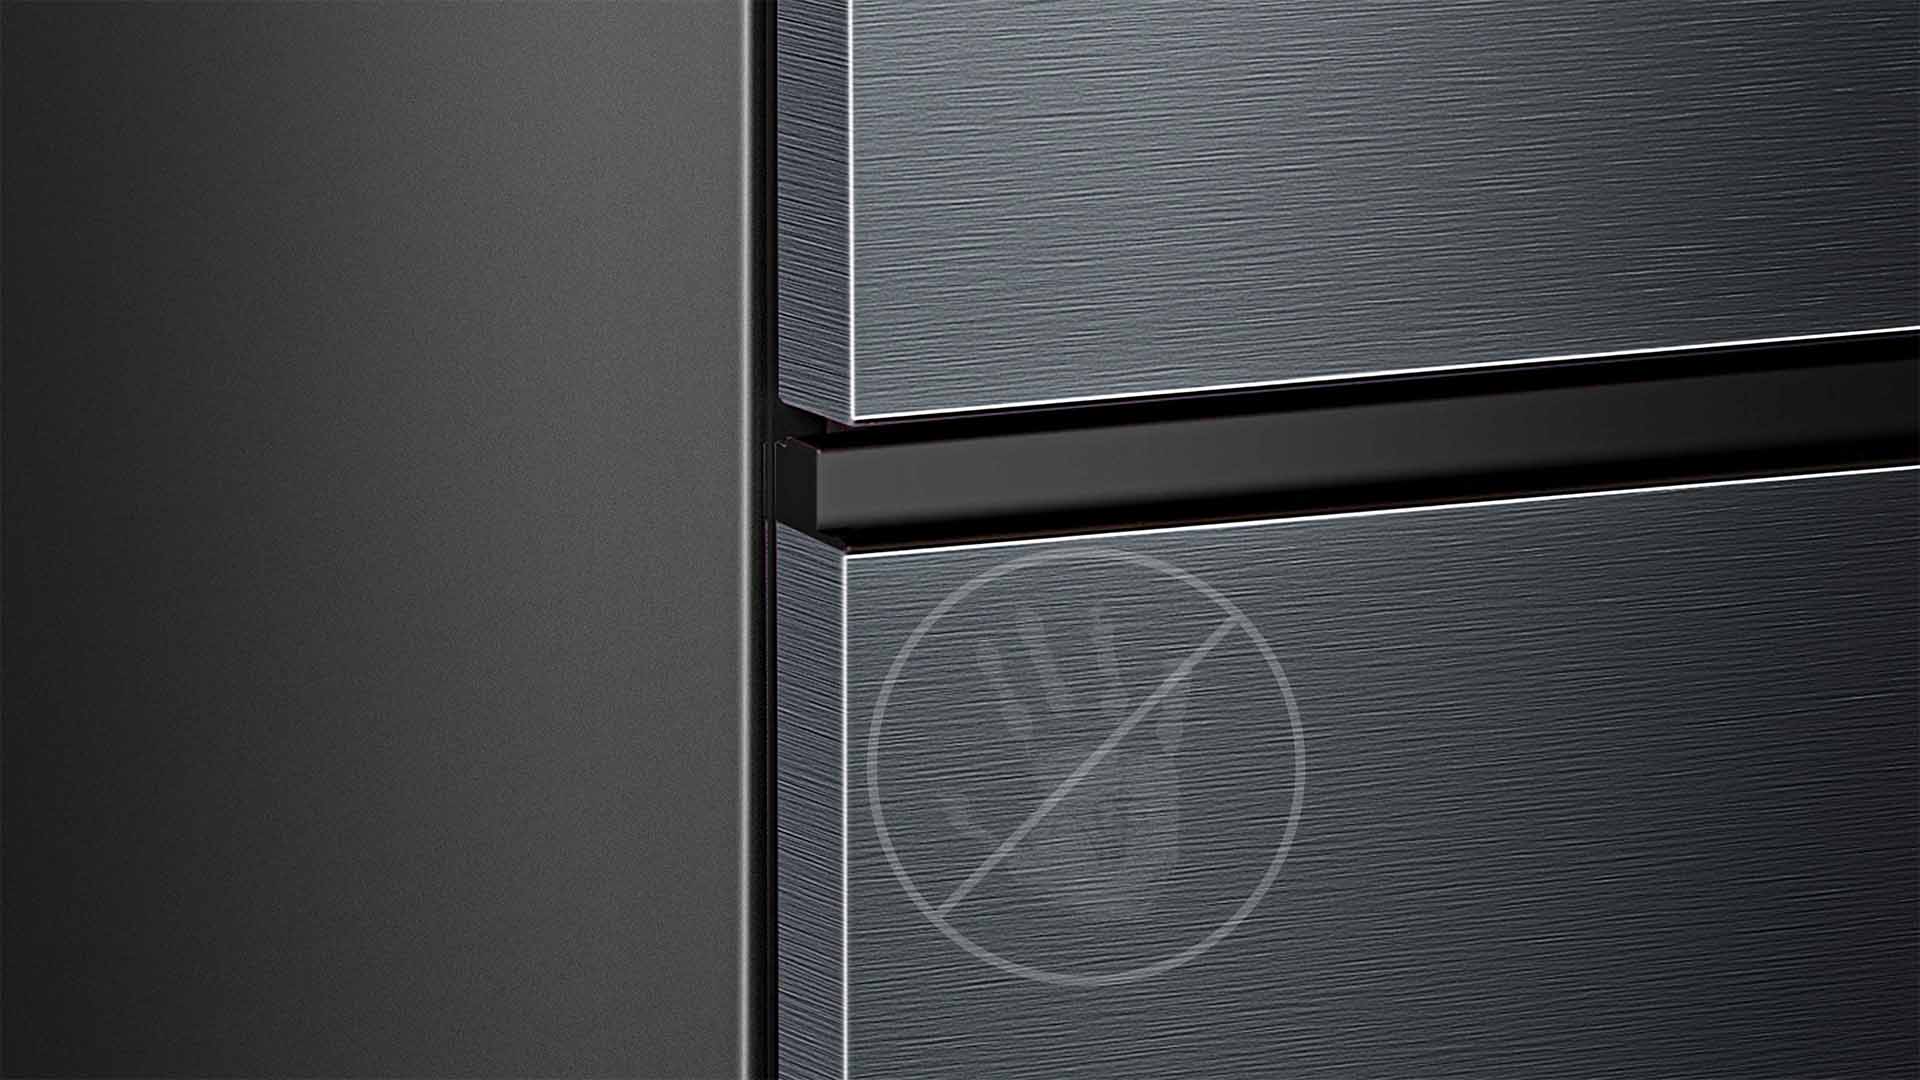 Matt stainless steel doors: resistant to fingerprints and scratches